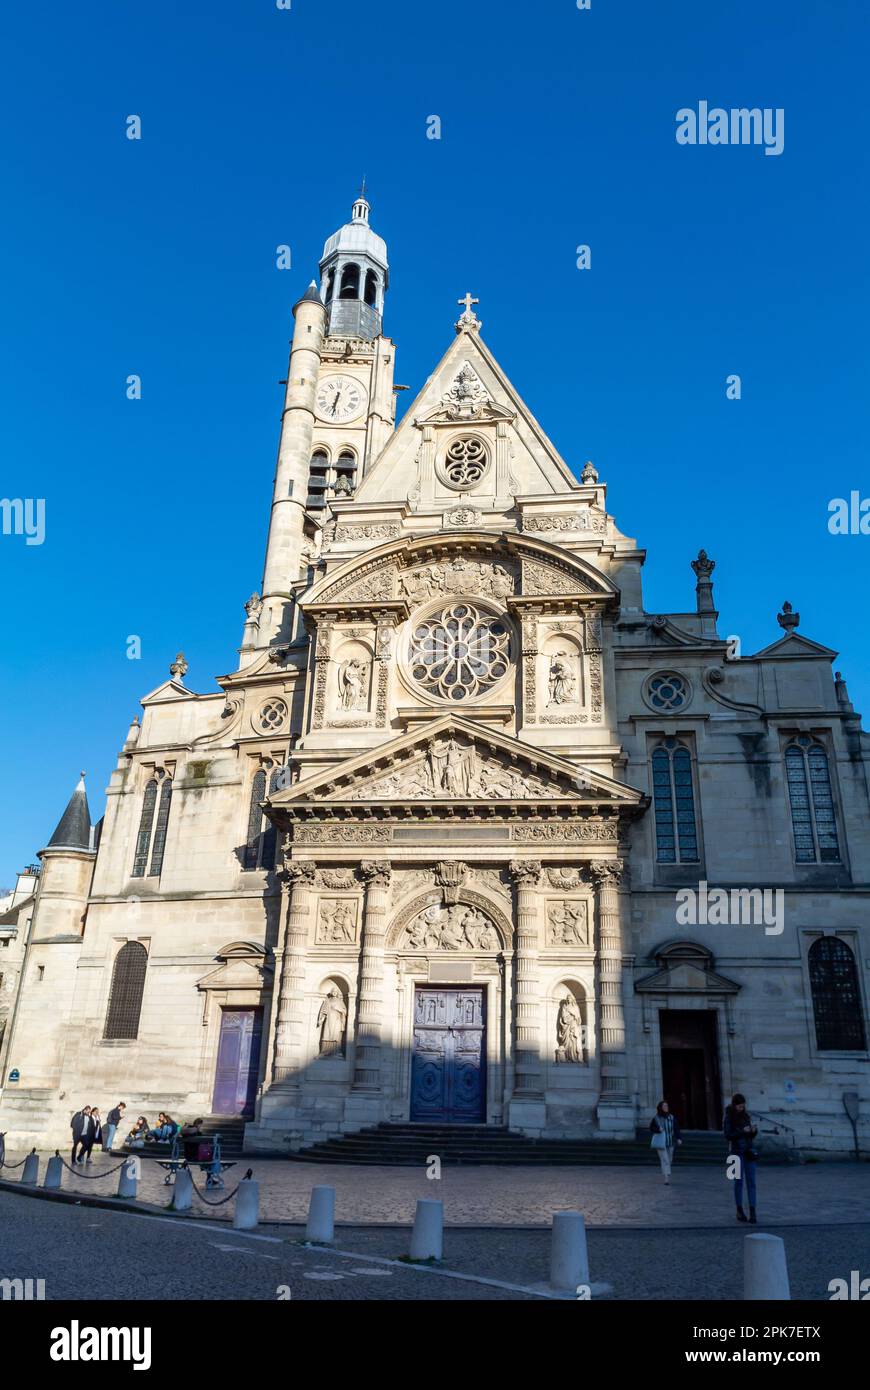 Parigi, Francia, la facciata di Saint Etienne du Mont o Saint-Etienne-du-Mont che è una chiesa medievale nel quartiere latino di Parigi. Foto Stock